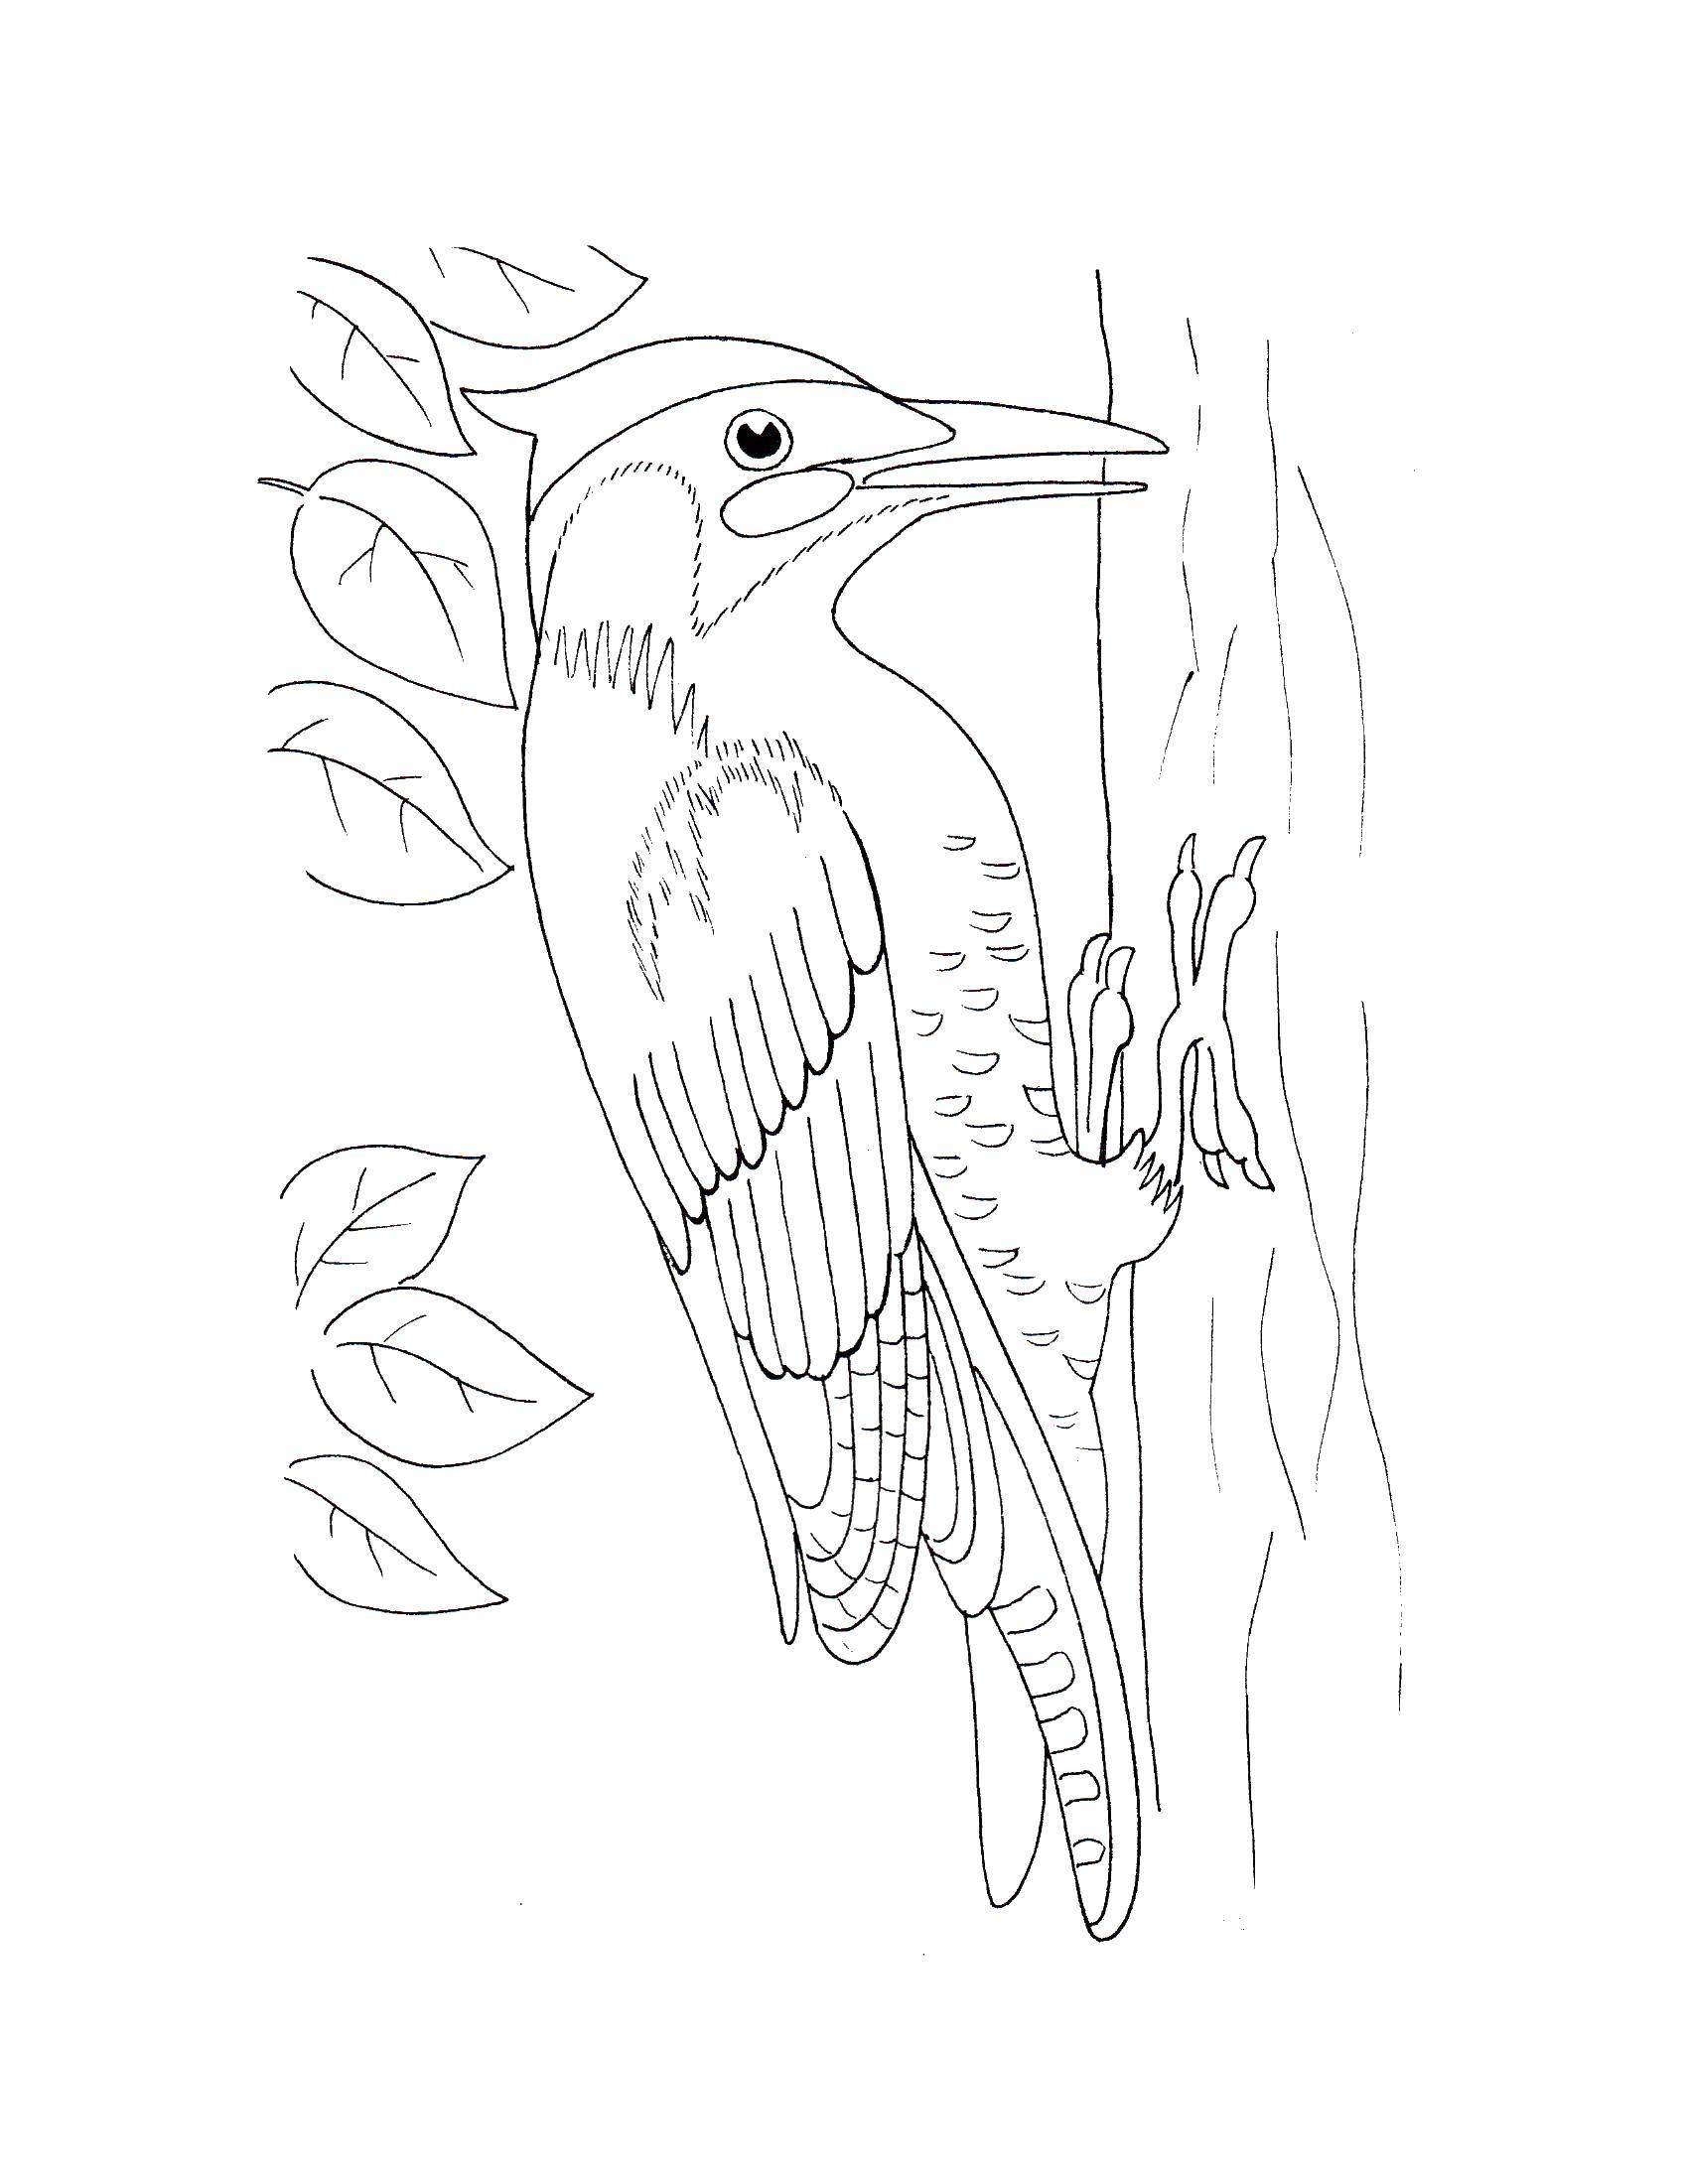 Coloring Woodpecker. Category birds. Tags:  woodpecker , bird.